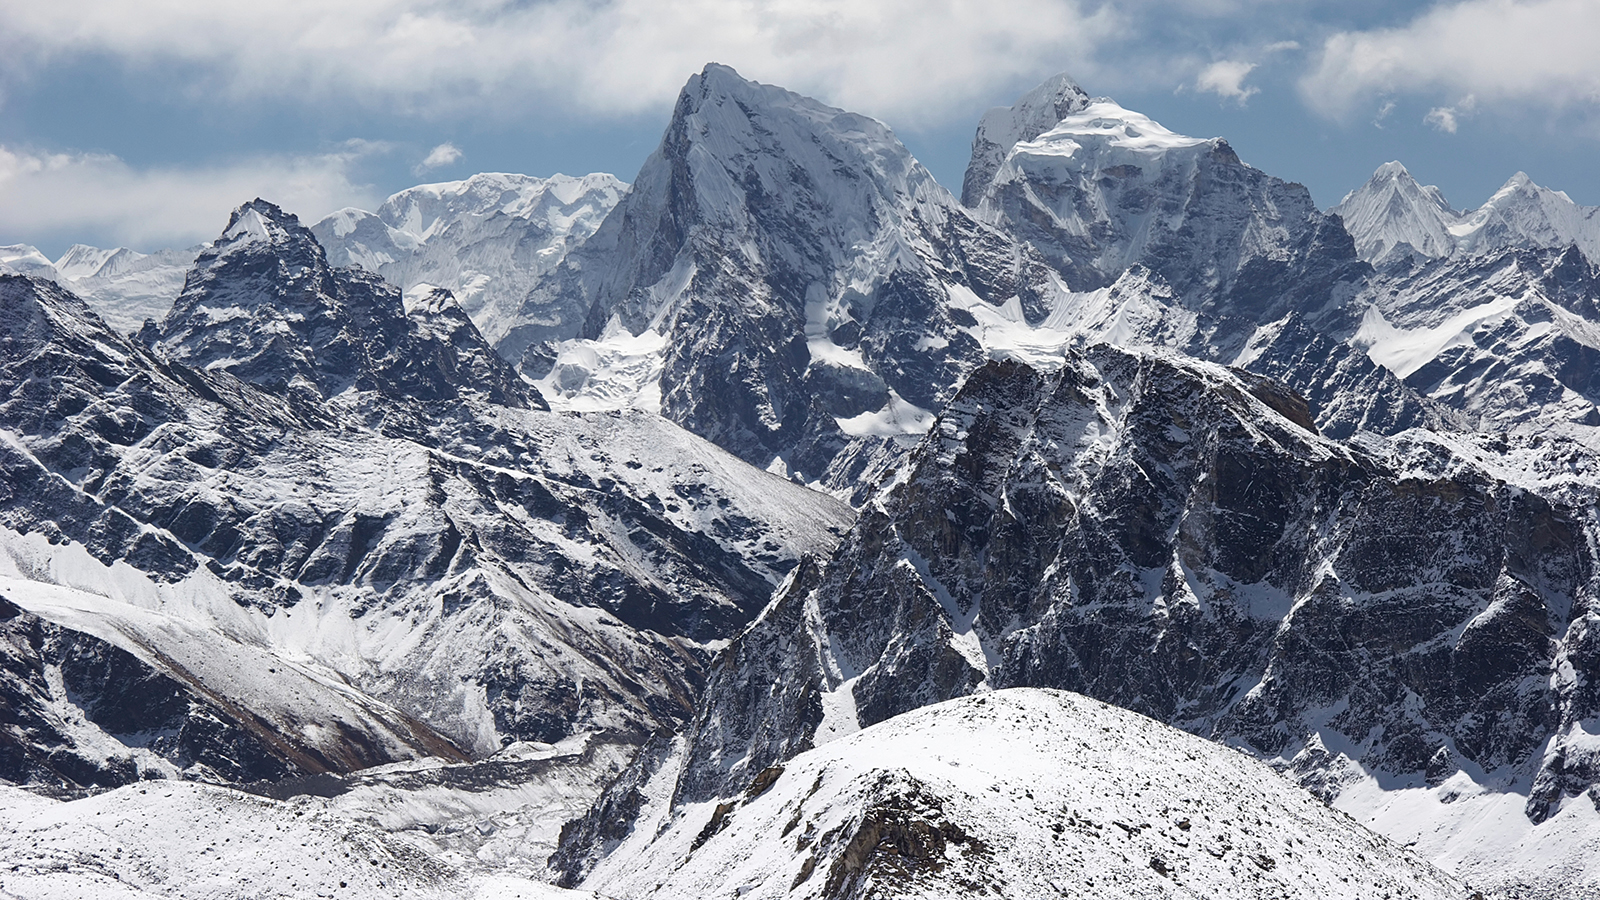 Cholatse and Taboche mountains. Everest region, Himalayas, Nepal.